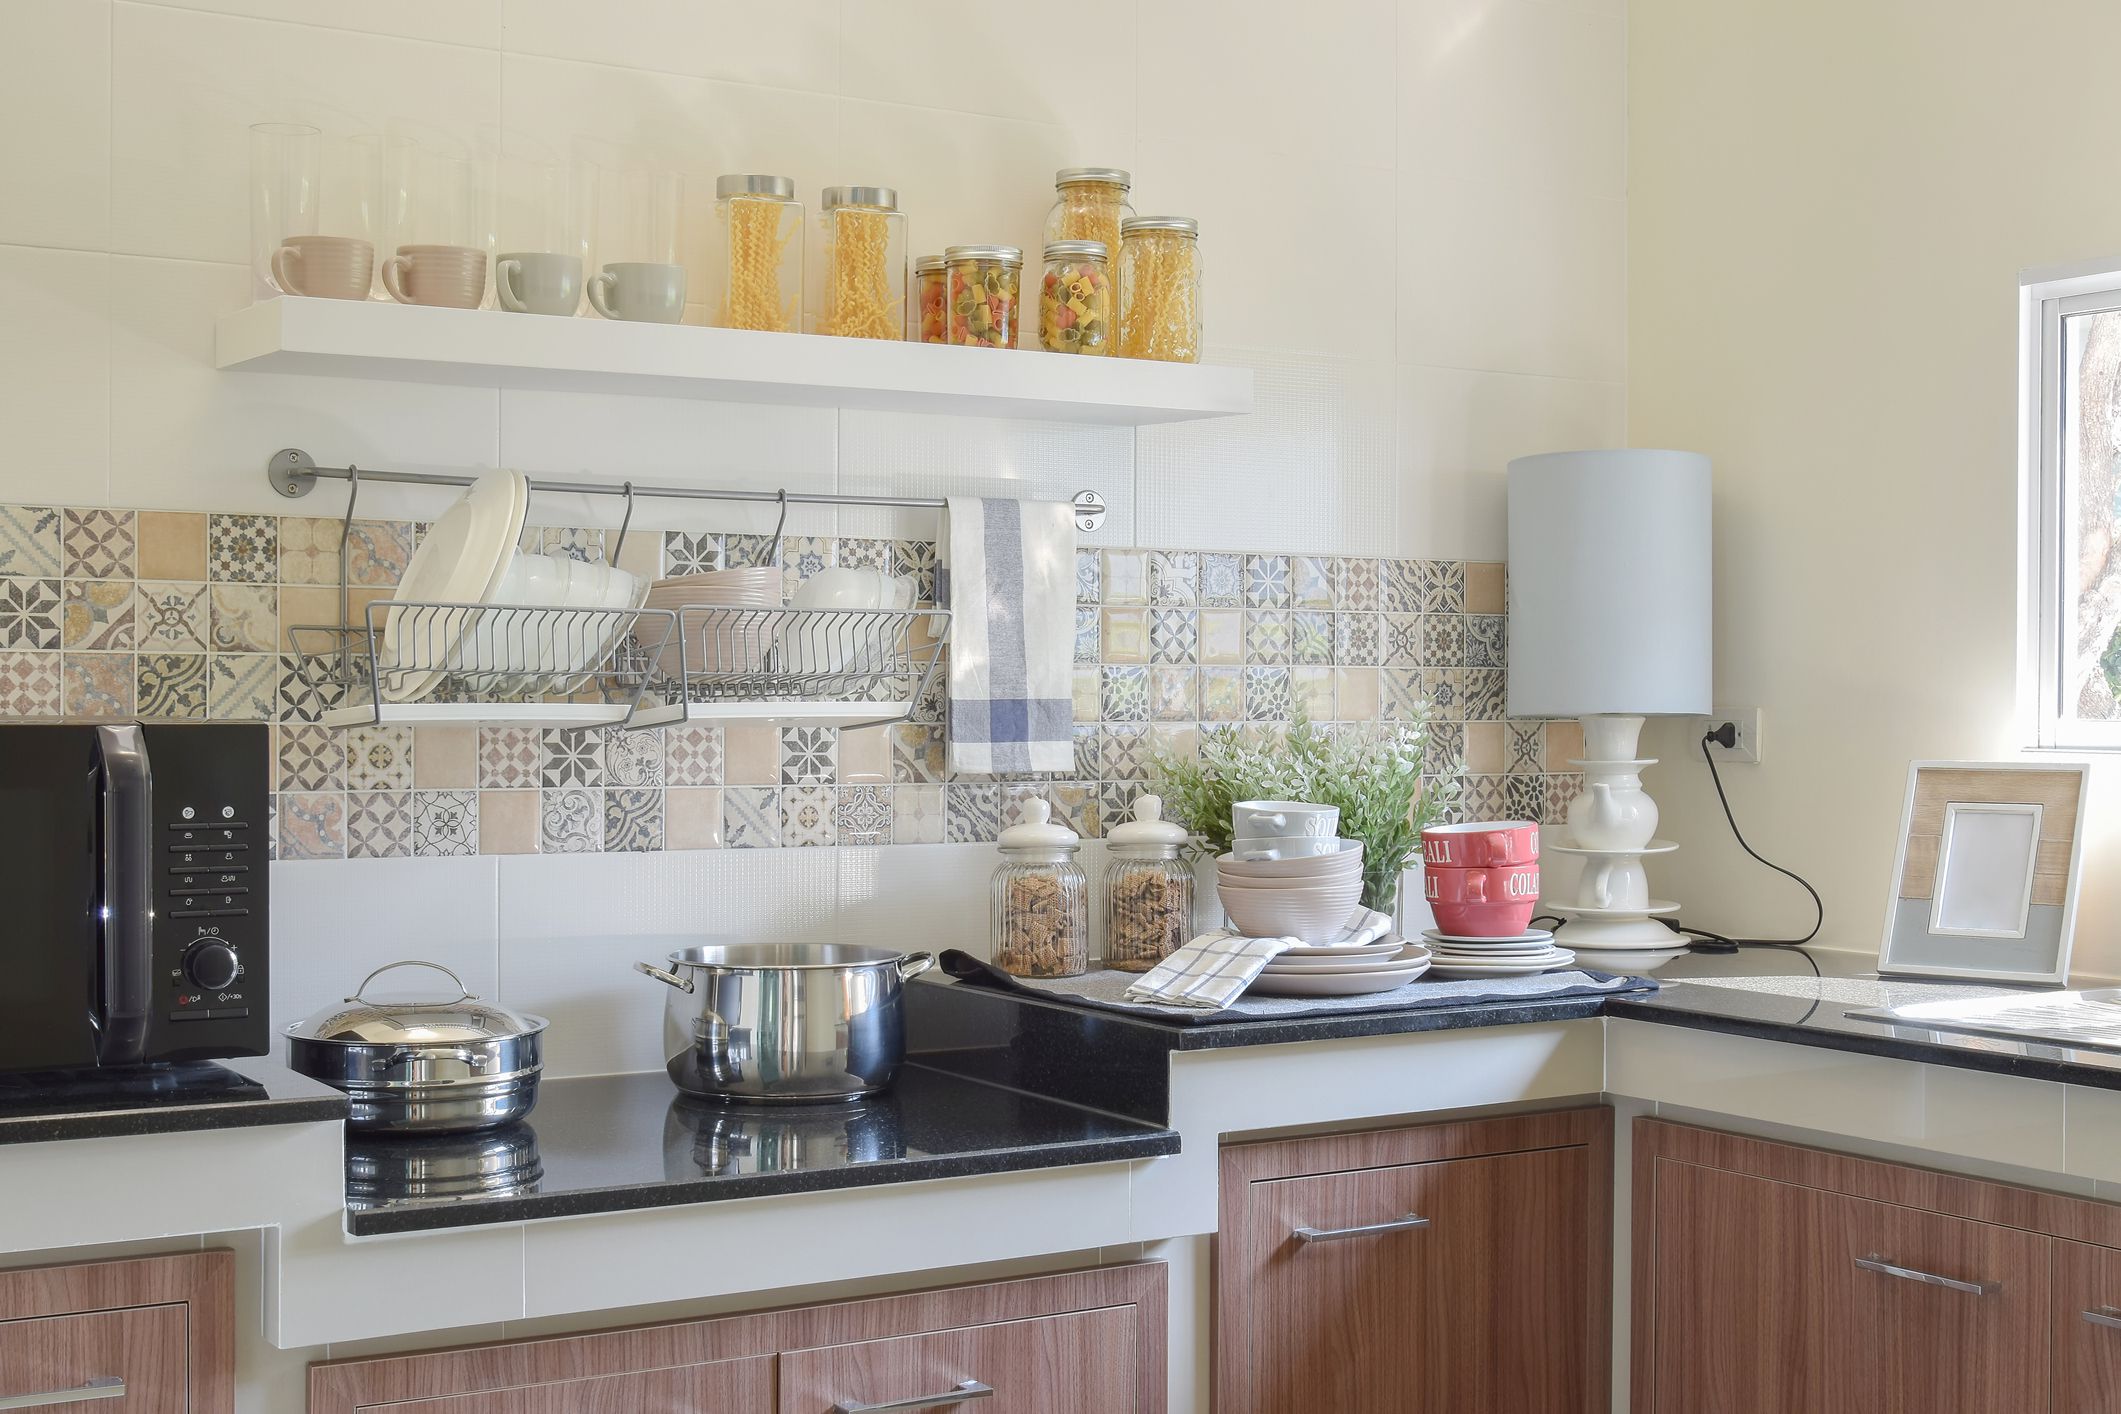 9 DIY Kitchen Backsplash Ideas